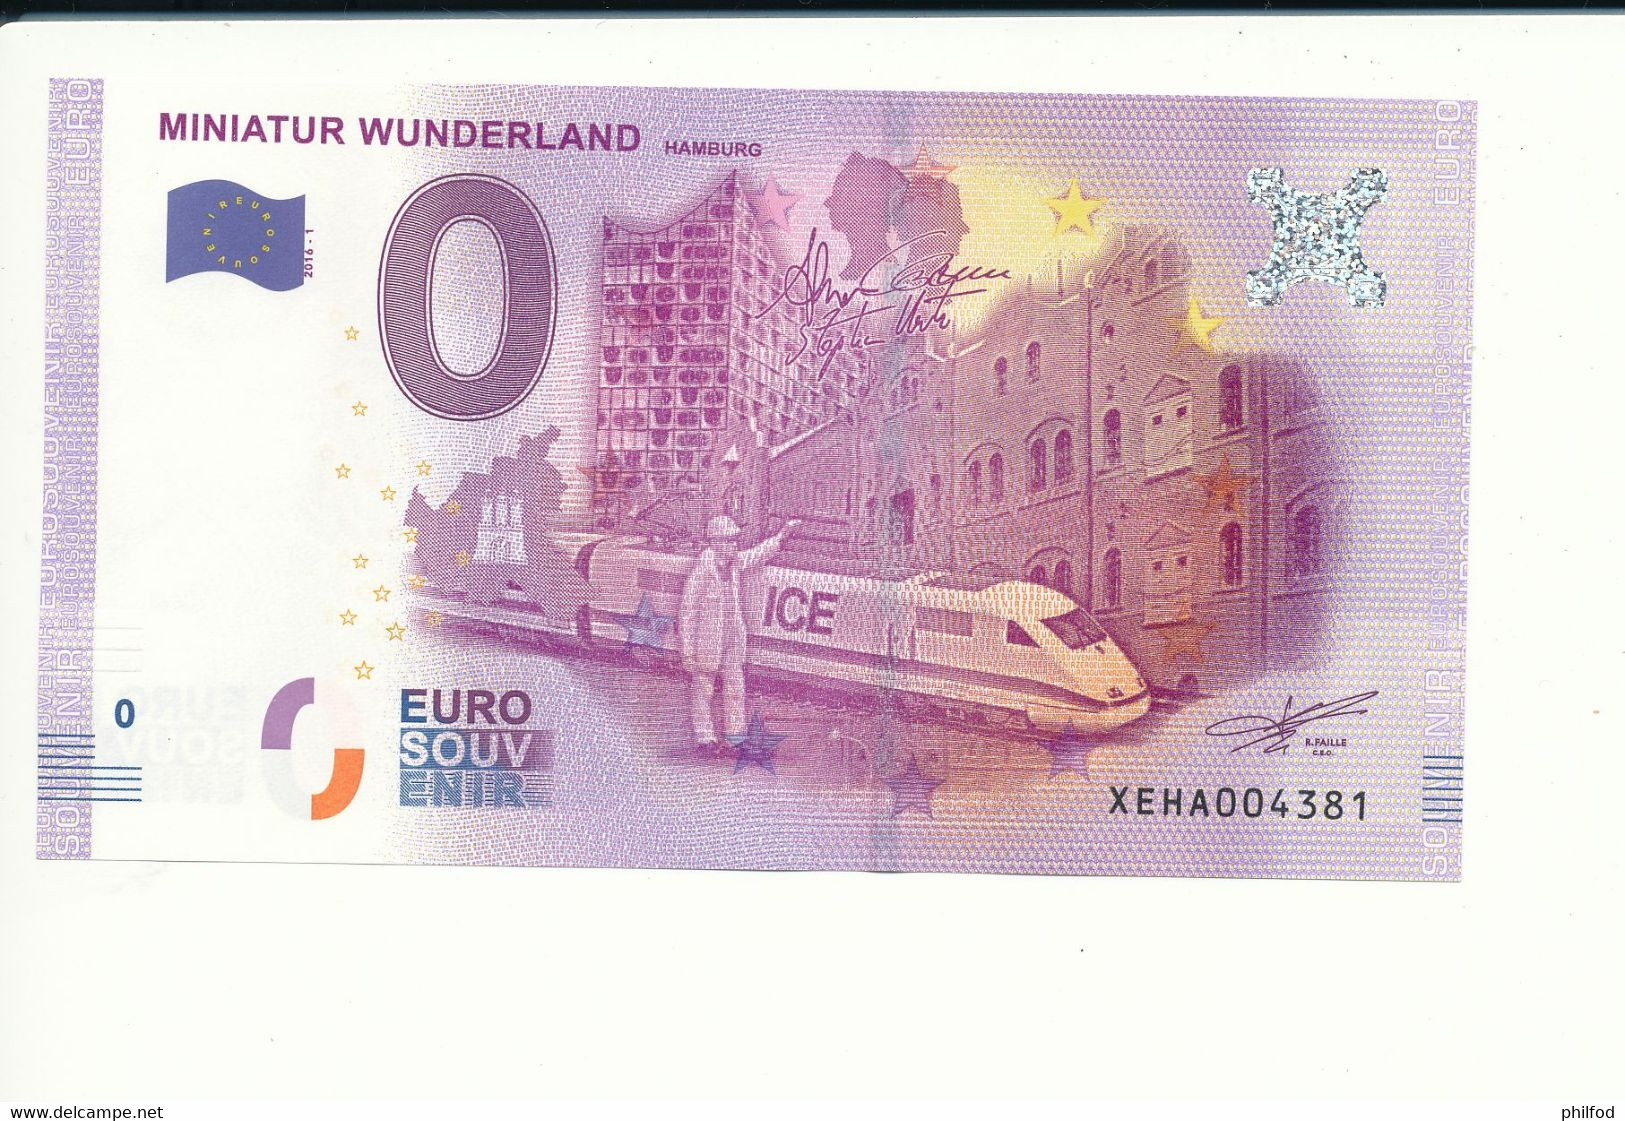 Billet Souvenir - 0 Euro - XEHA - 2016- 1 - MINIATUR WUNDERLAND HAMBURG - N° 4381 - Billet épuisé - Kiloware - Banknoten